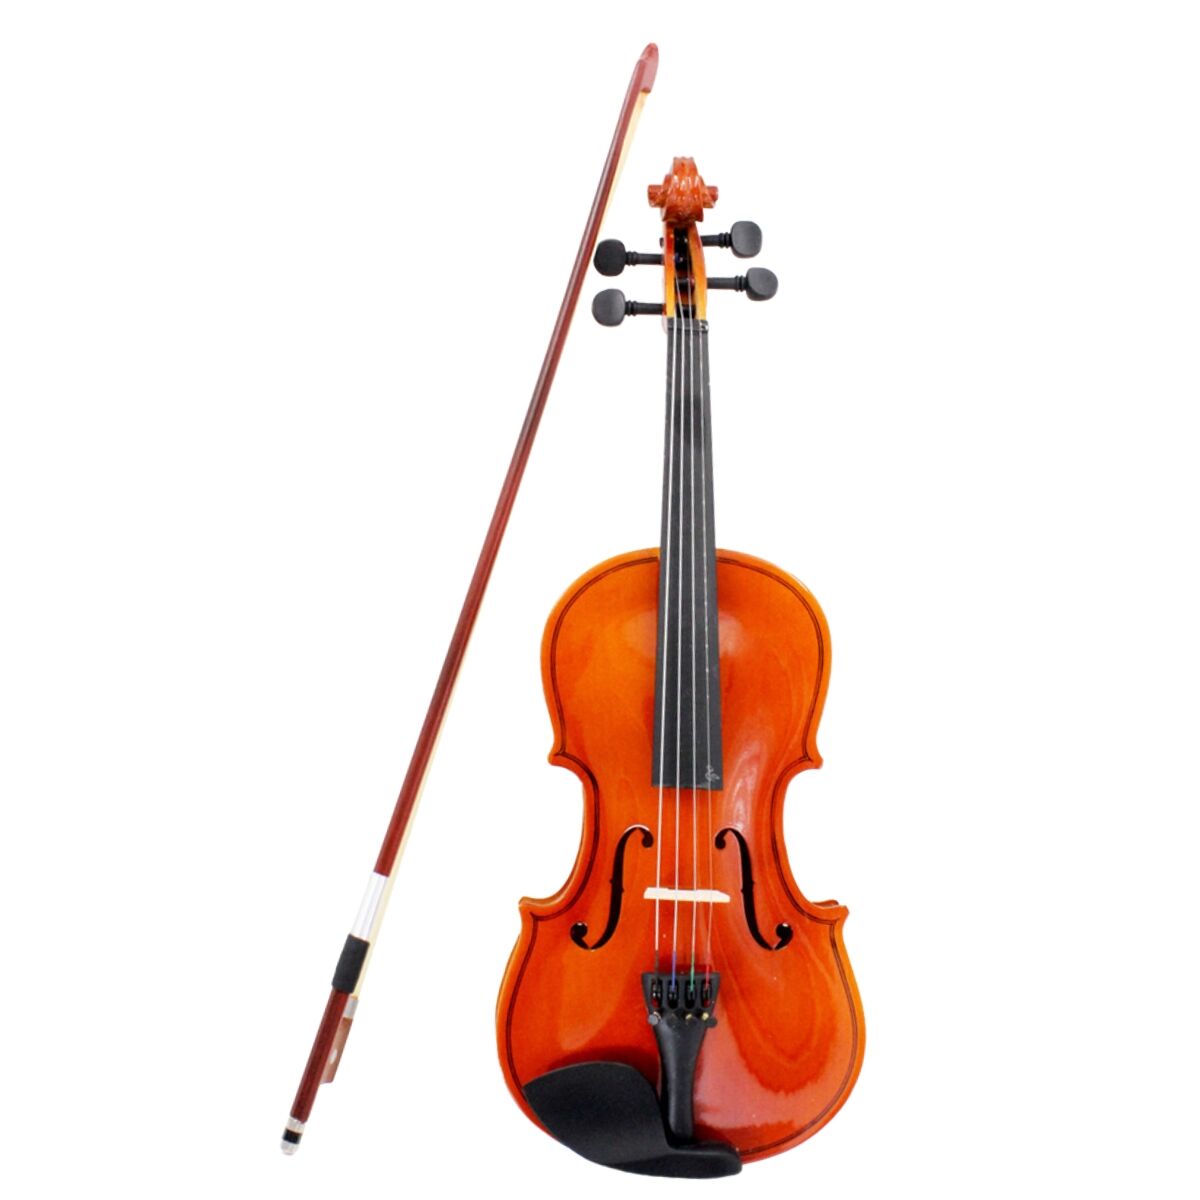 Wooden strings VIO2 fiolinstrenger